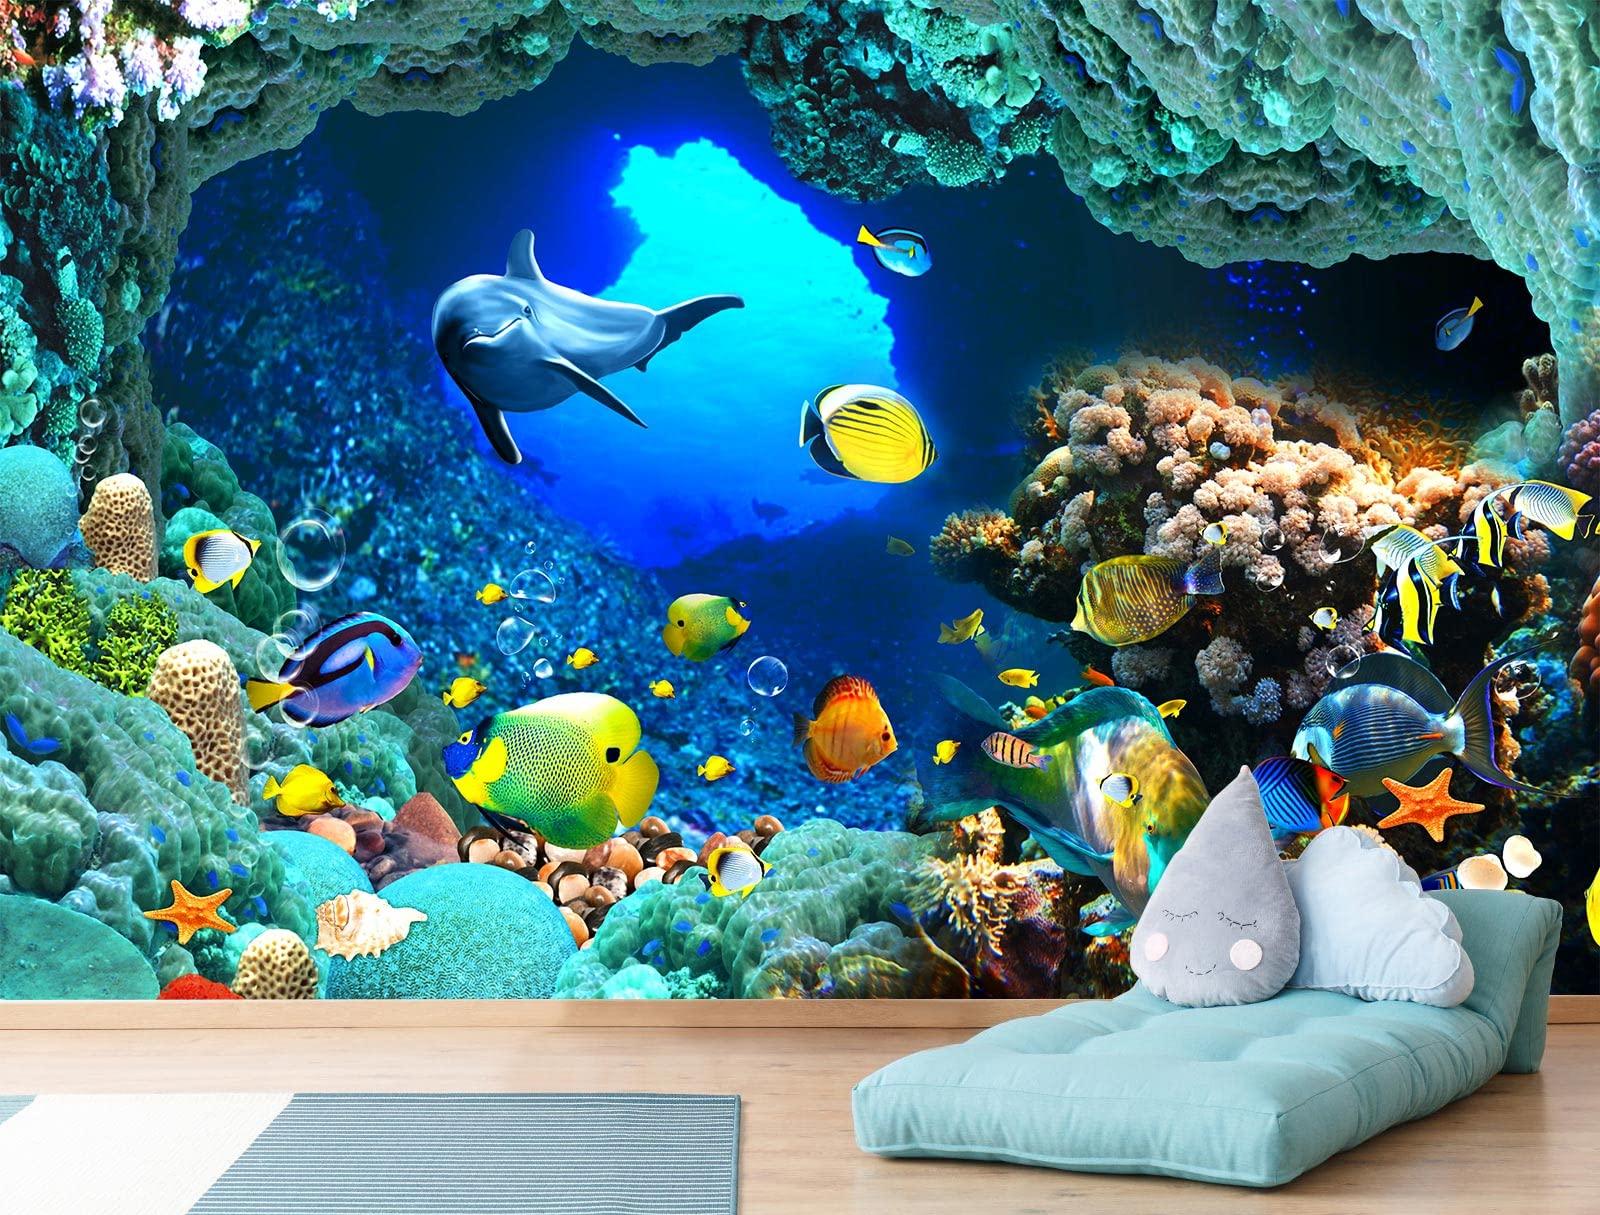 Reyhui Undersea World Wall Mural Ocean Fish Wallpaper